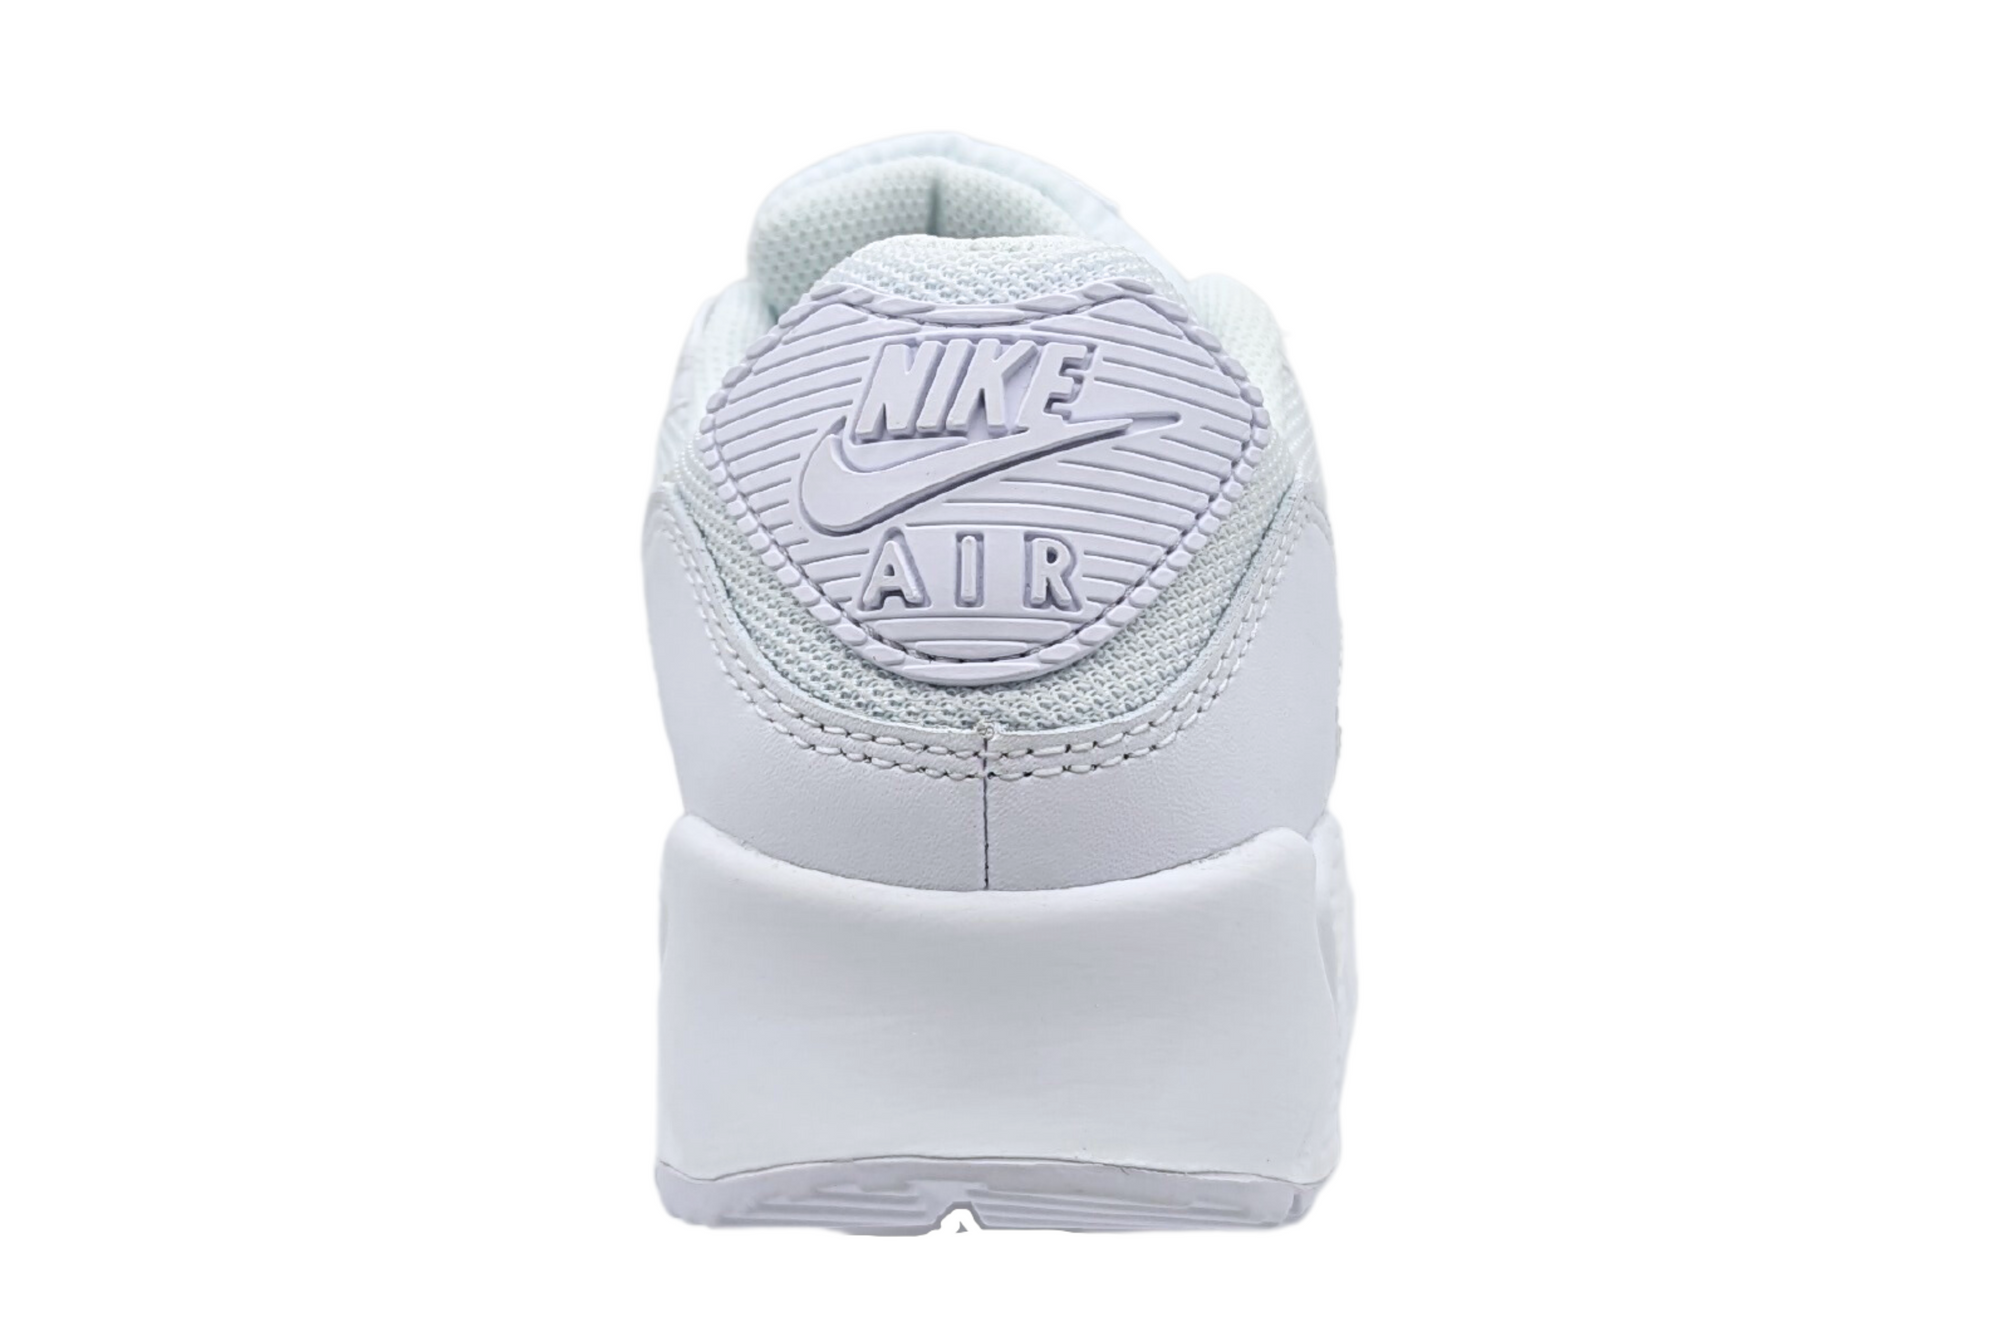 Tenis Nike Air Max 90 blancos para hombre